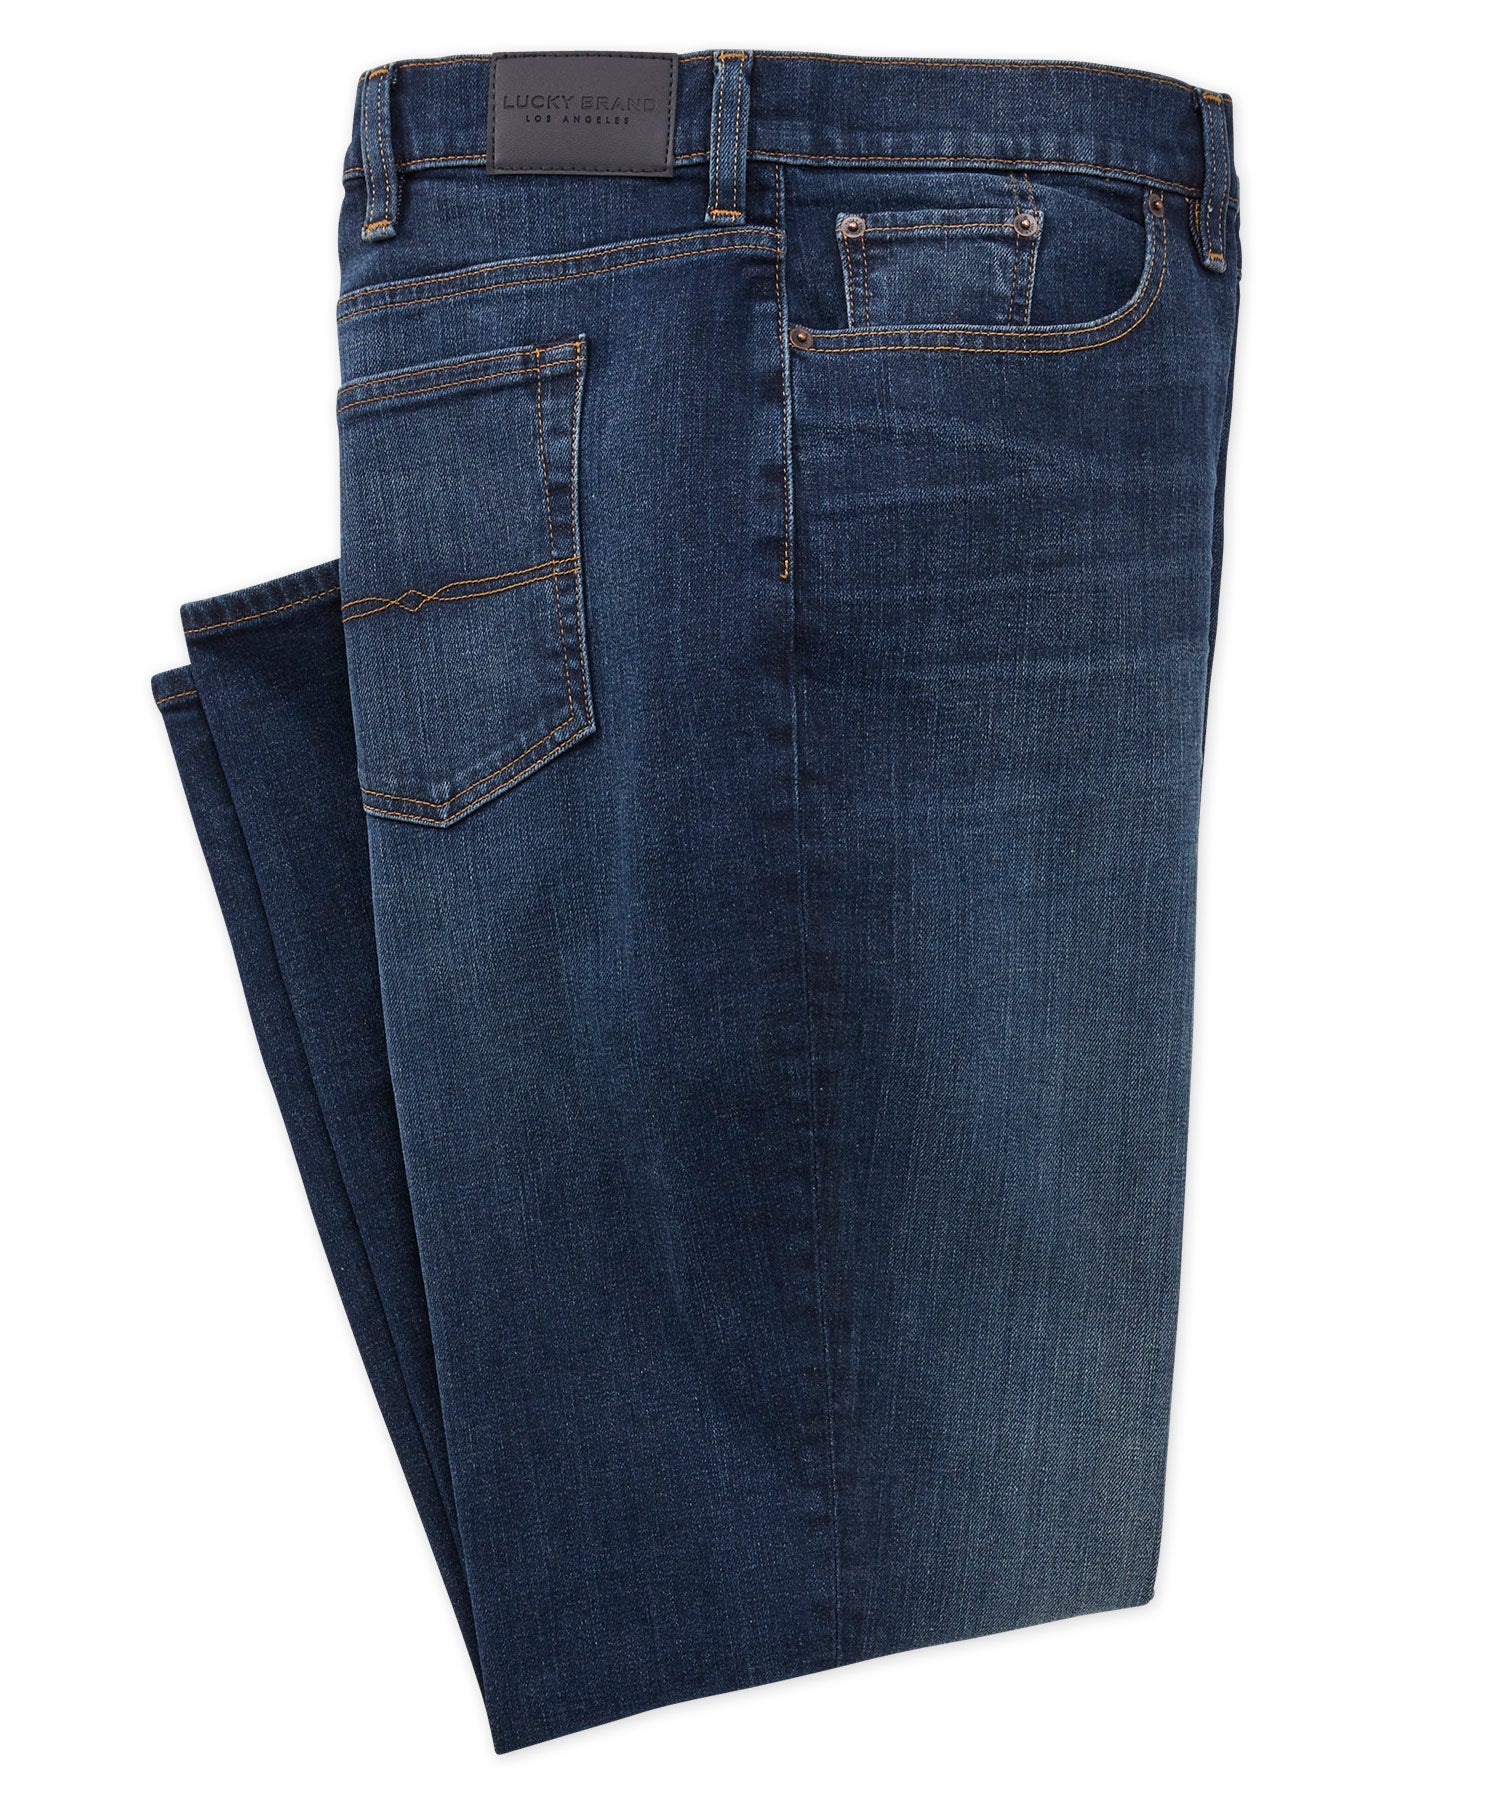 Lucky Brand Corte Madera Stretch Medium Wash Jeans